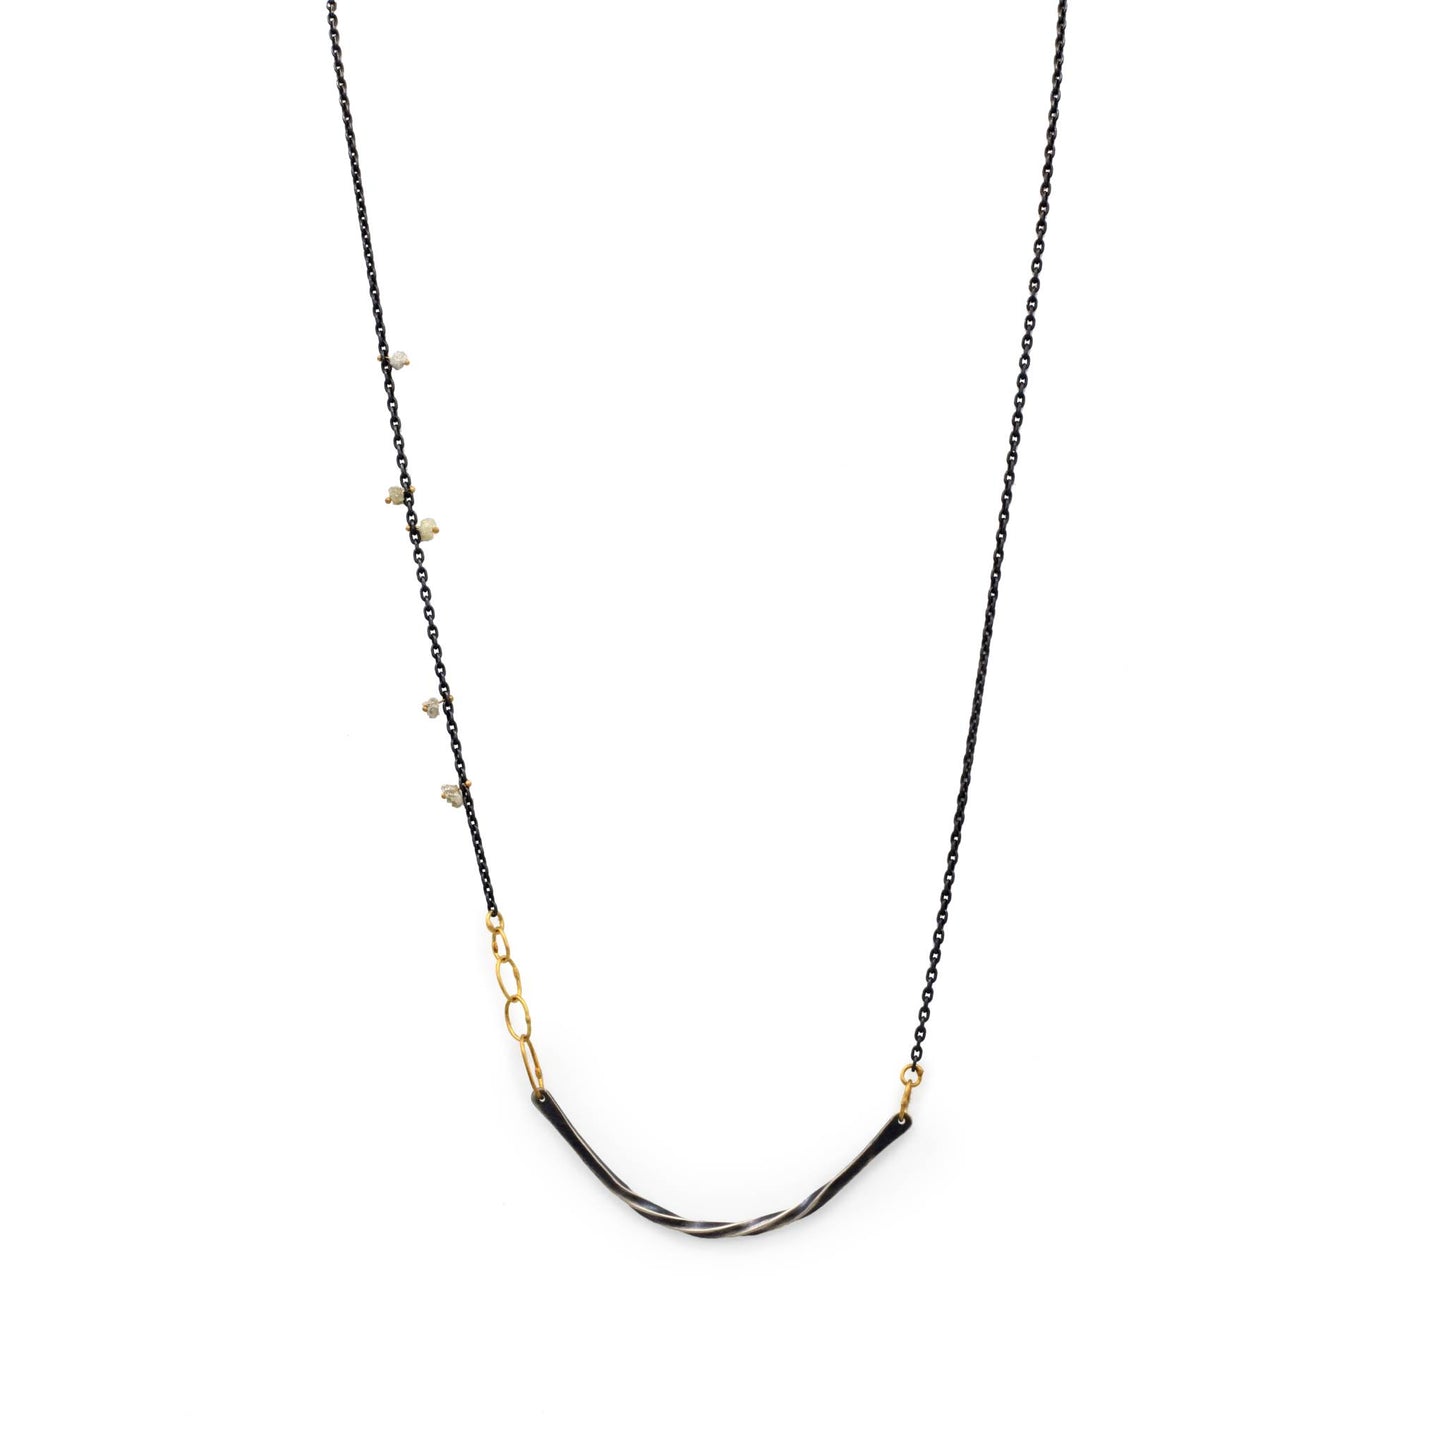 Sarah McGuire Studio | "Bias Arc" 18k Gold, Raw Diamond + Sterling Silver Necklace | Firecracker